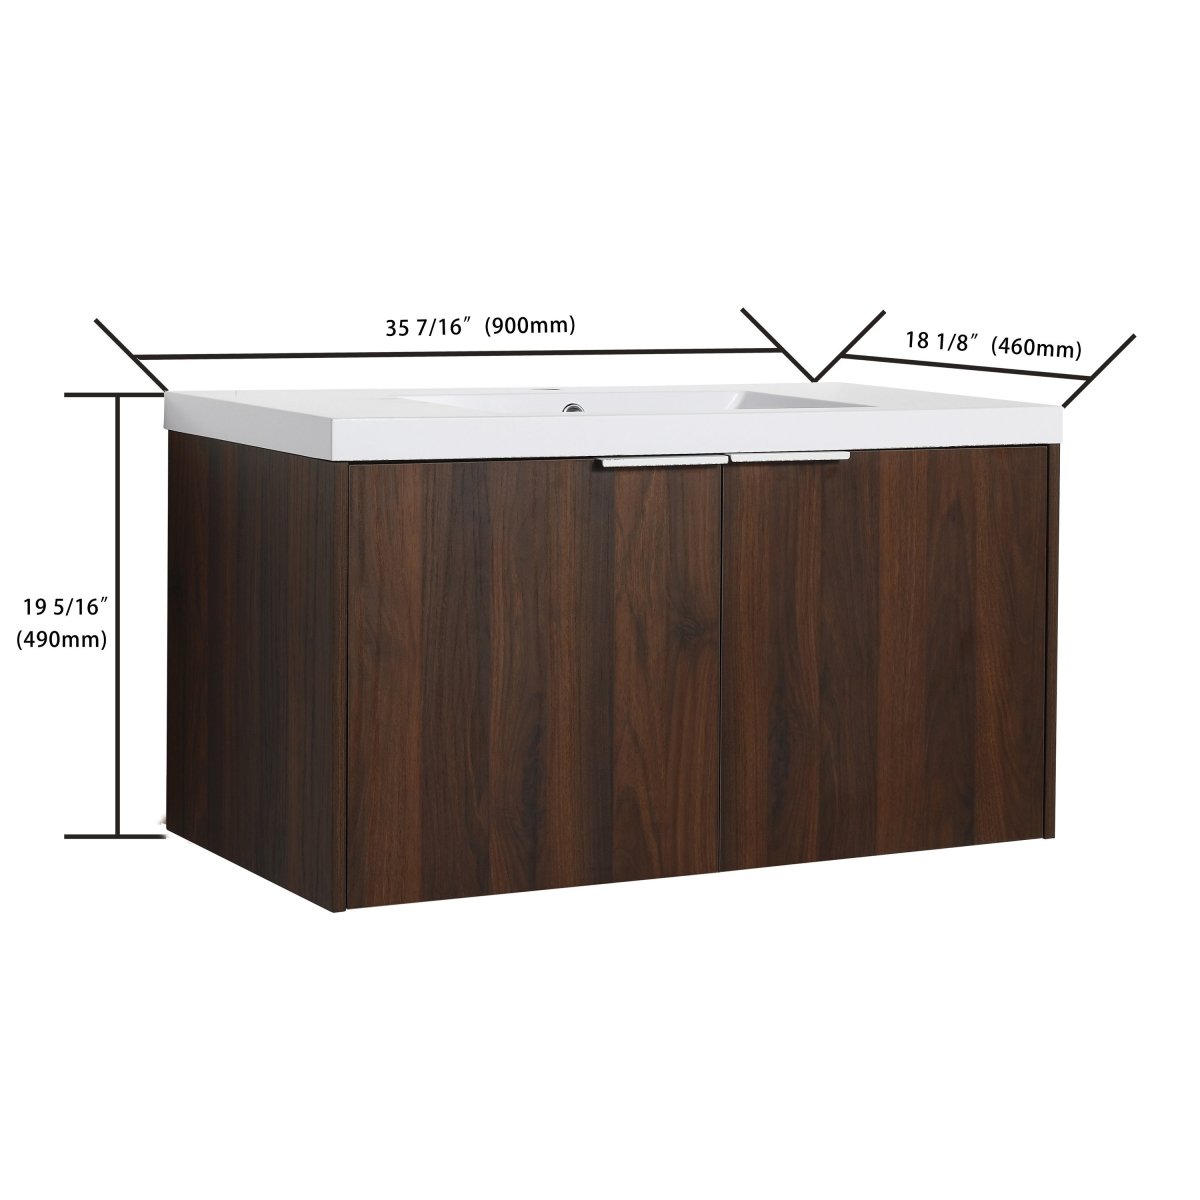 ExBrite 36" Modern Design Float Mounting Bathroom Vanity With Sink Soft Close Door